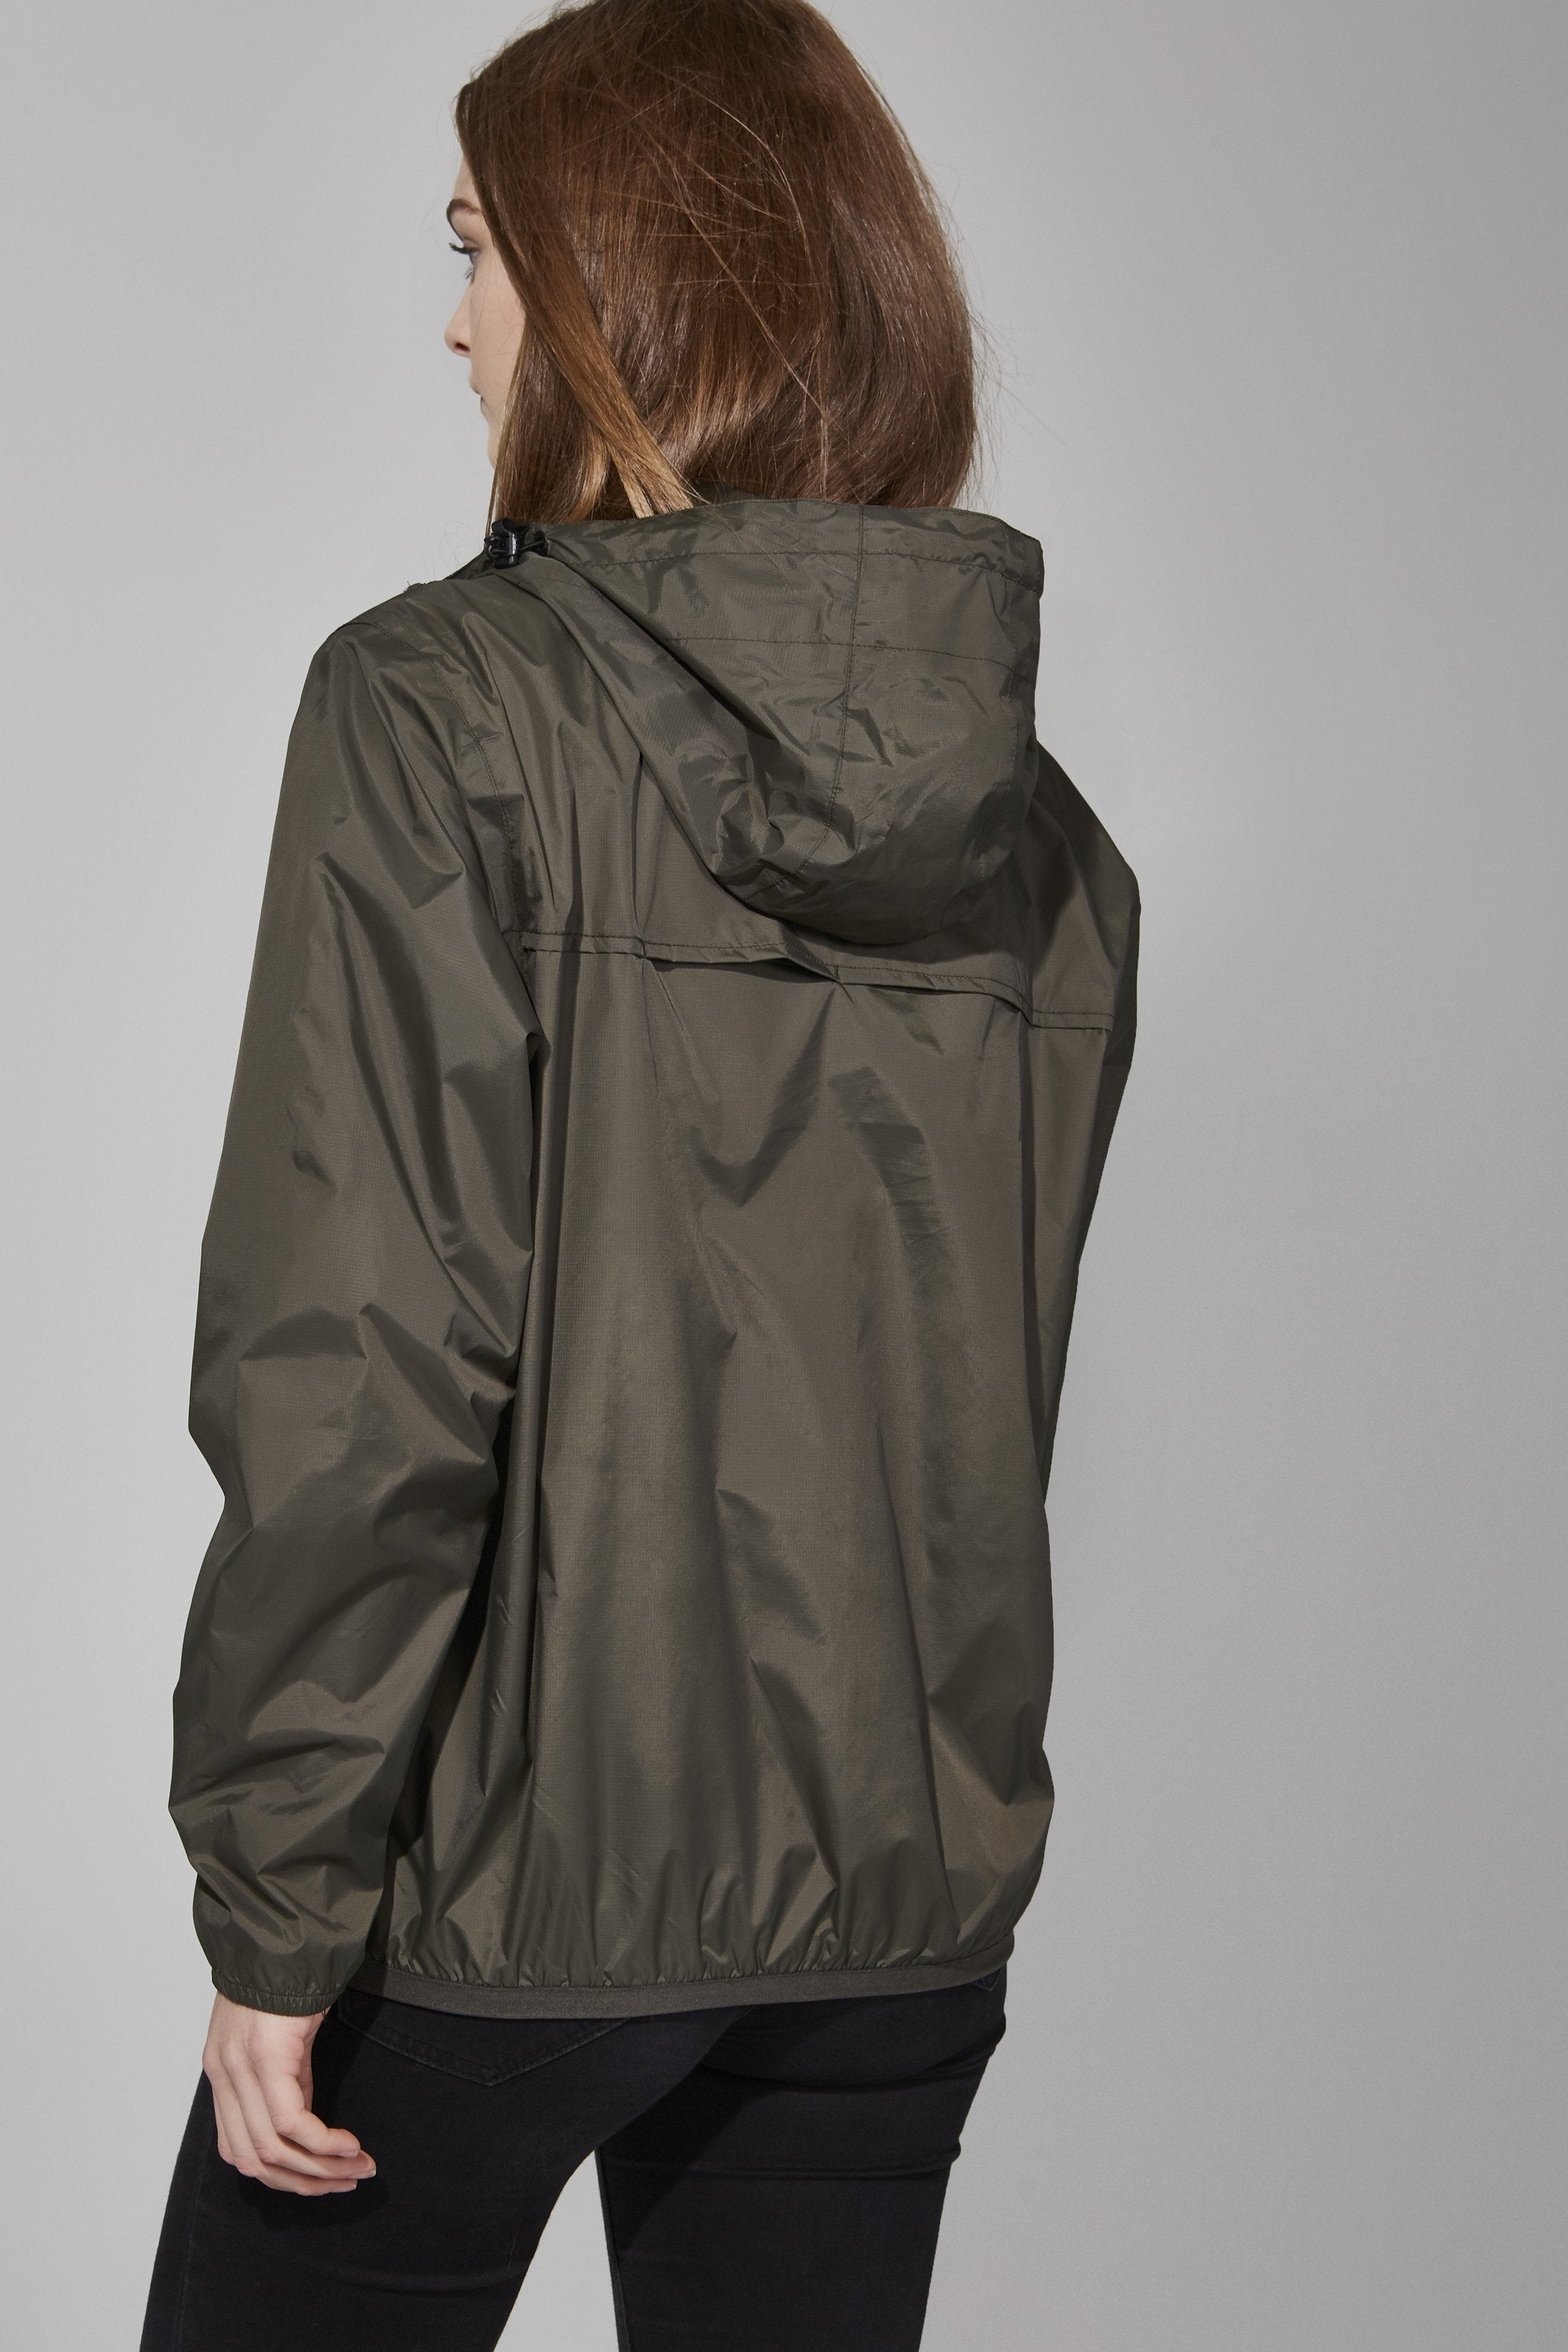 Picture of a Women's Quarter Zip Olive Green Waterproof Rain Jacket back